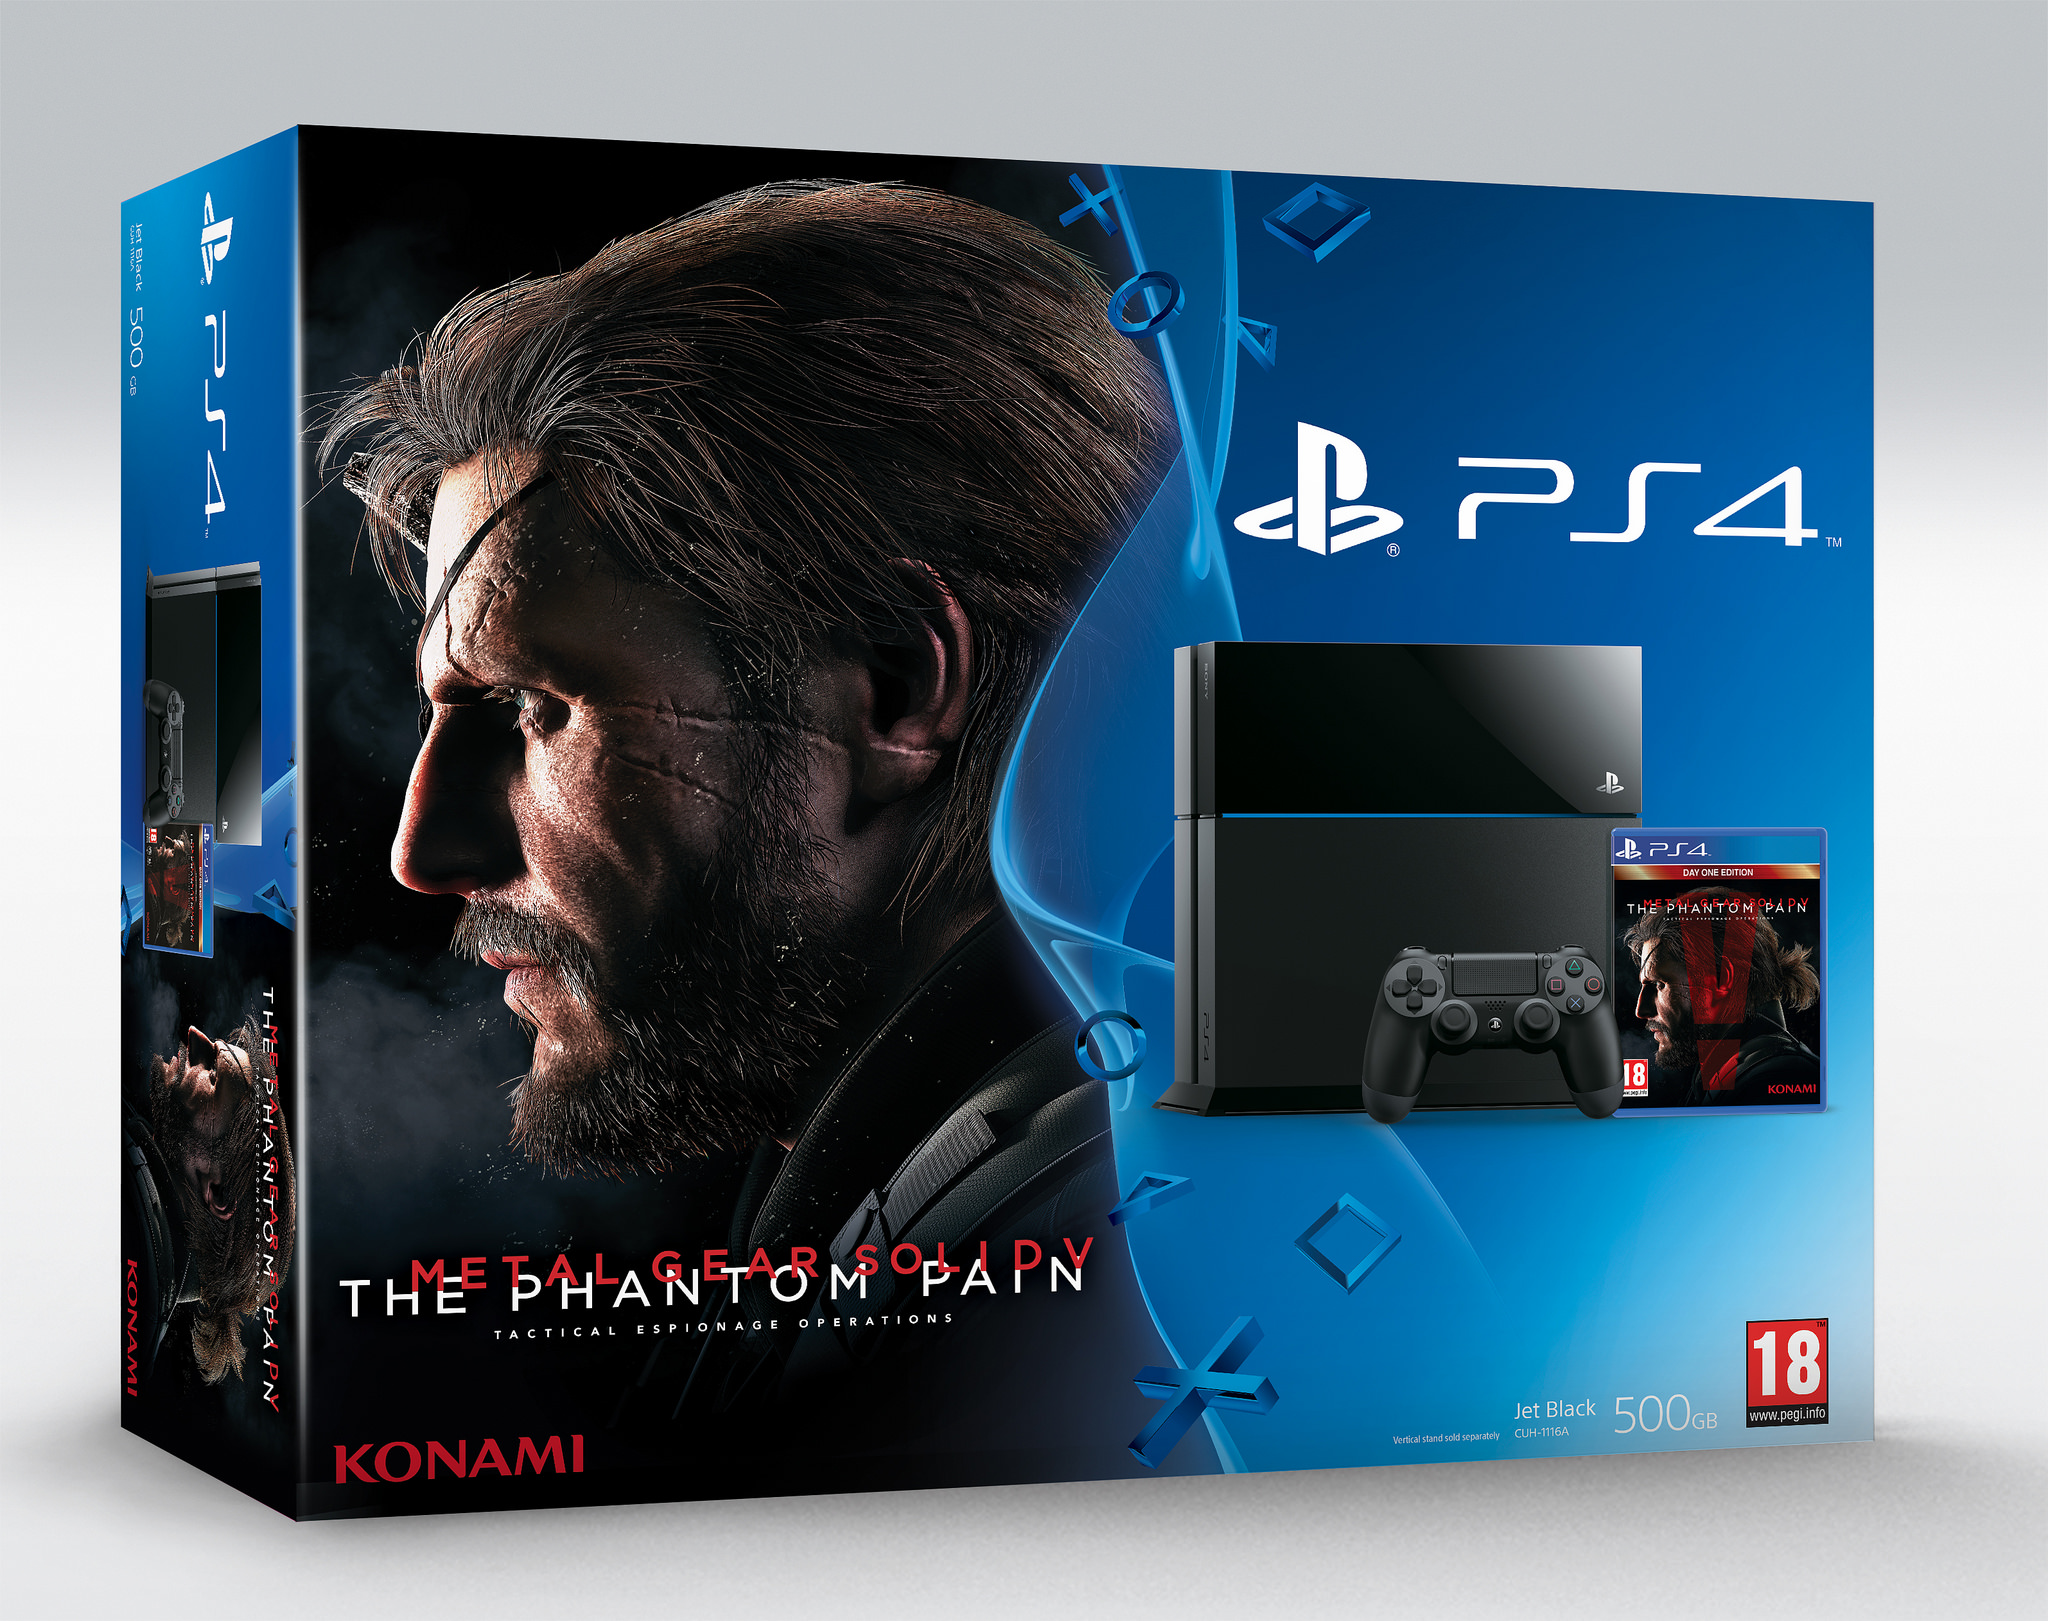 Metal Gear Solid V: The Phantom Pain PS4 Bundle